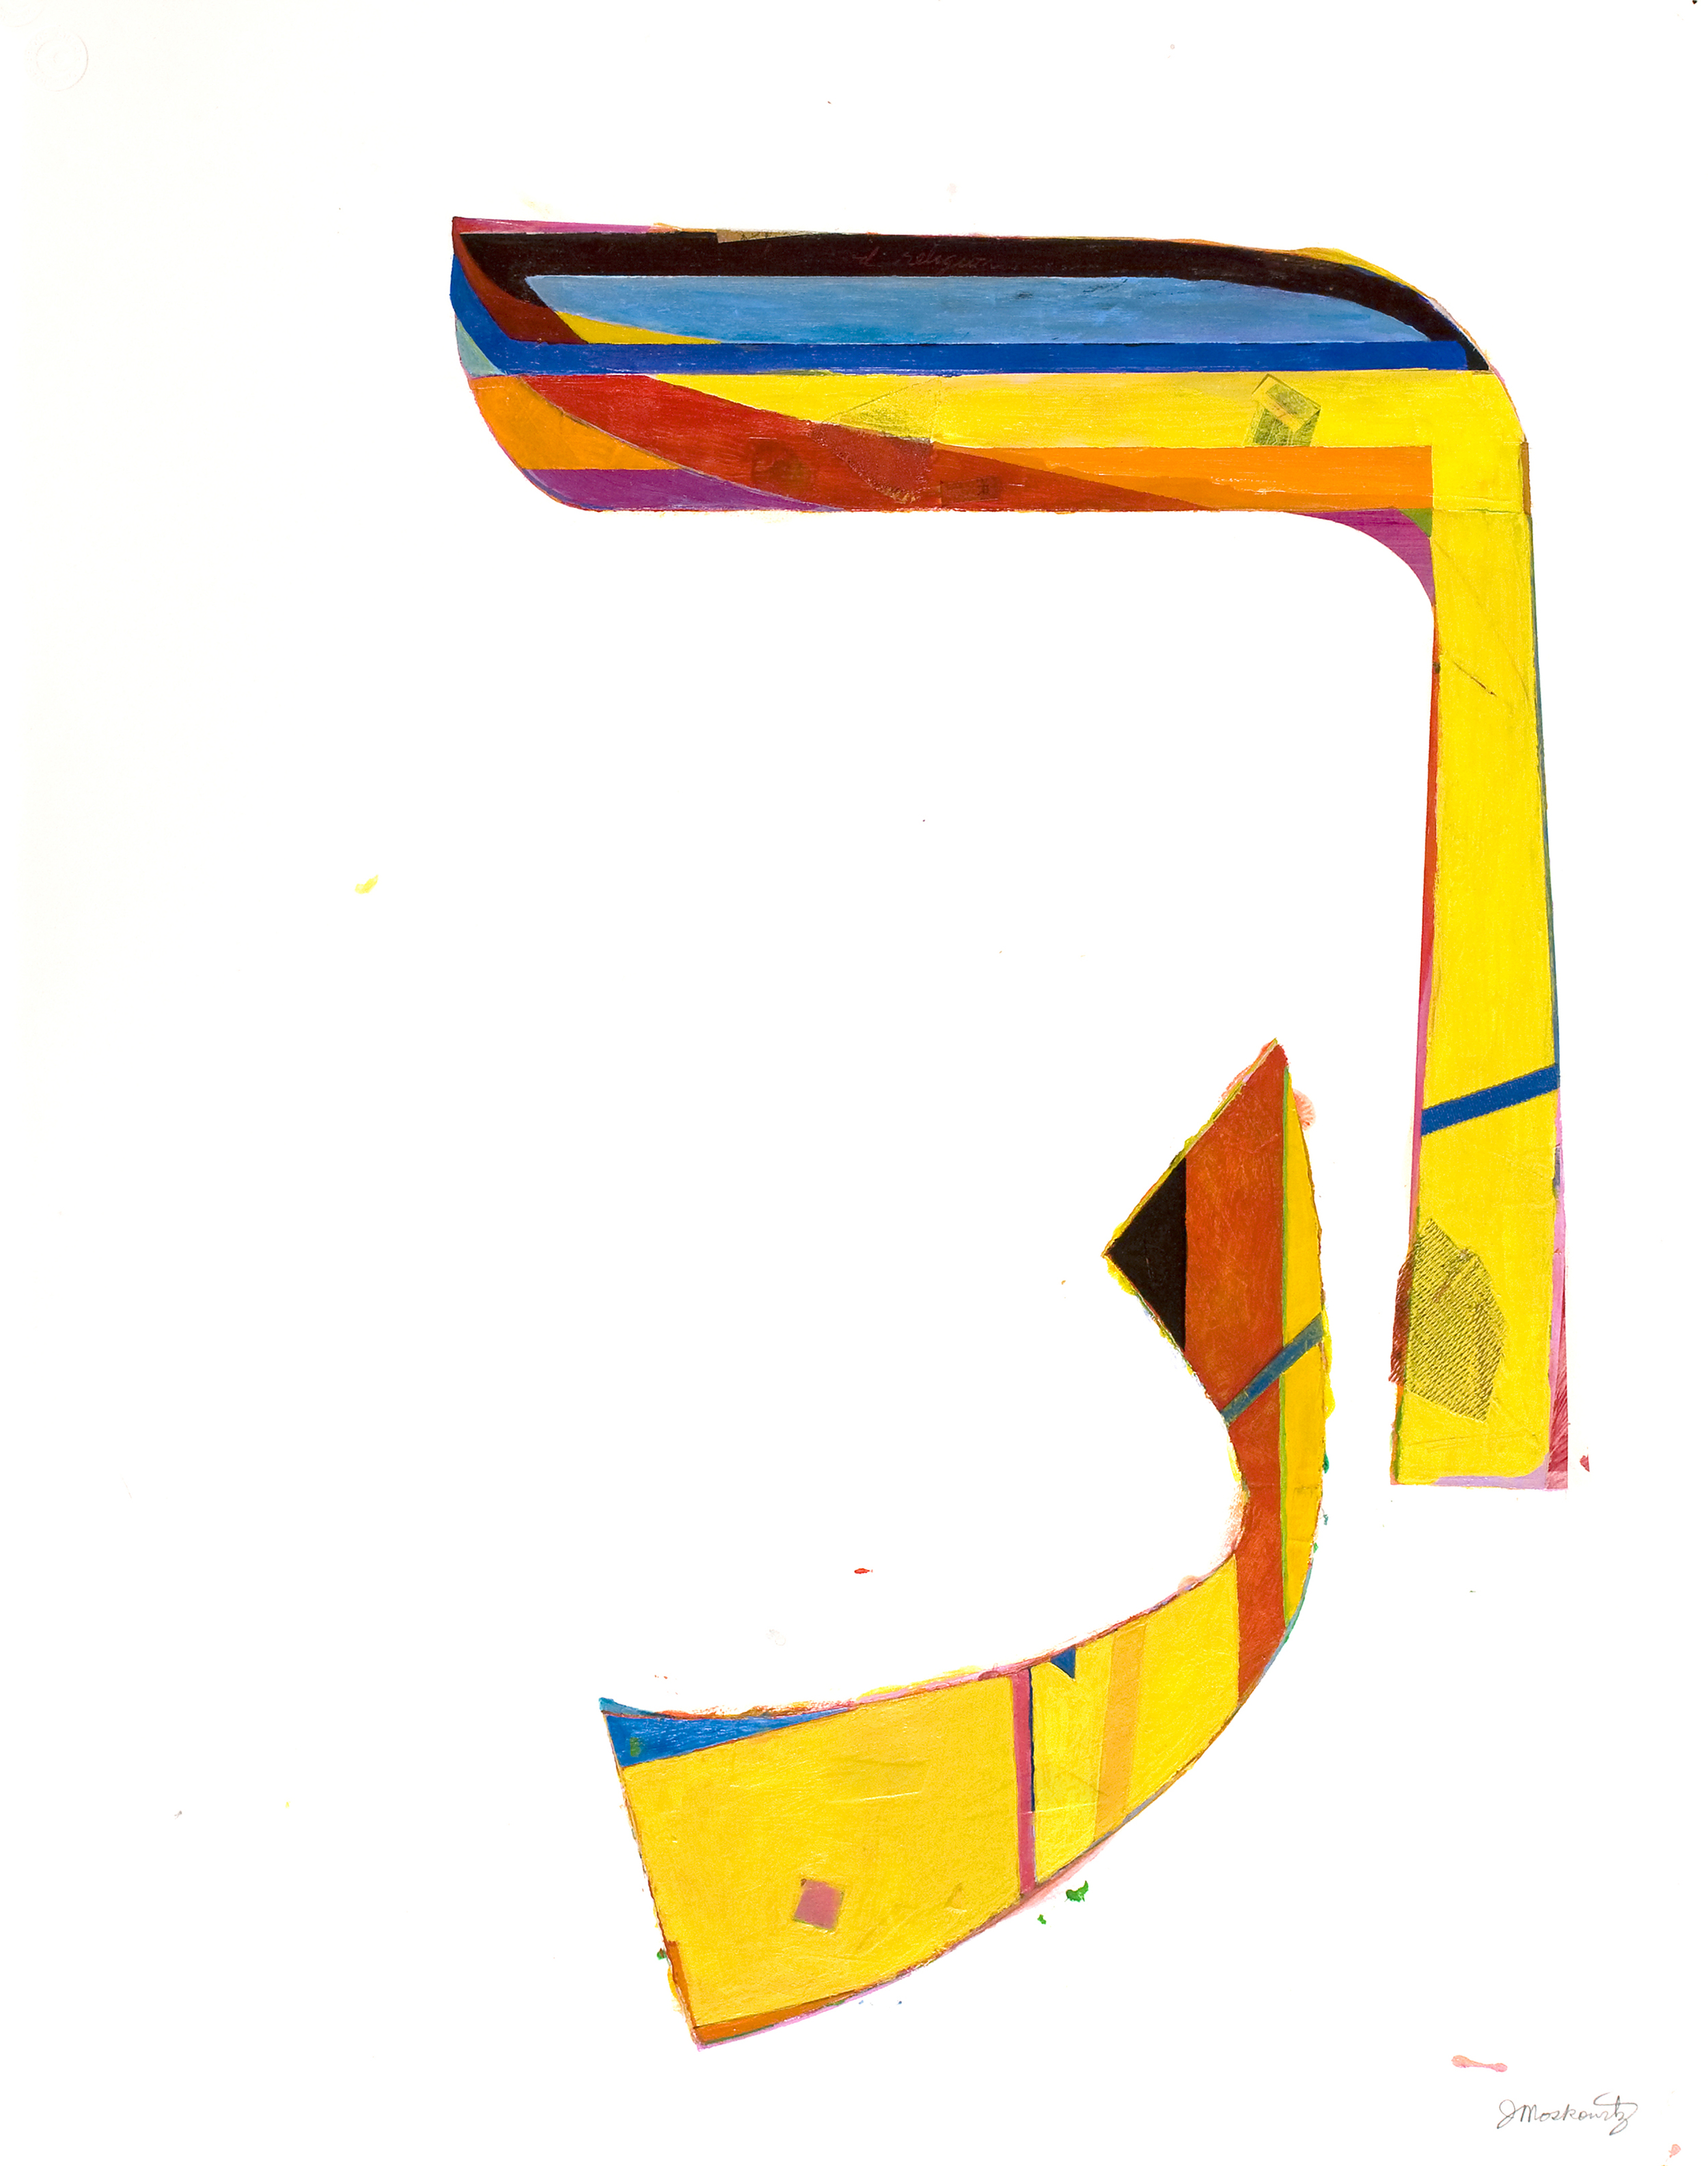  Joel Moskowitz " Resh / Raa " acrylic and collage on paper, 29"x21" 